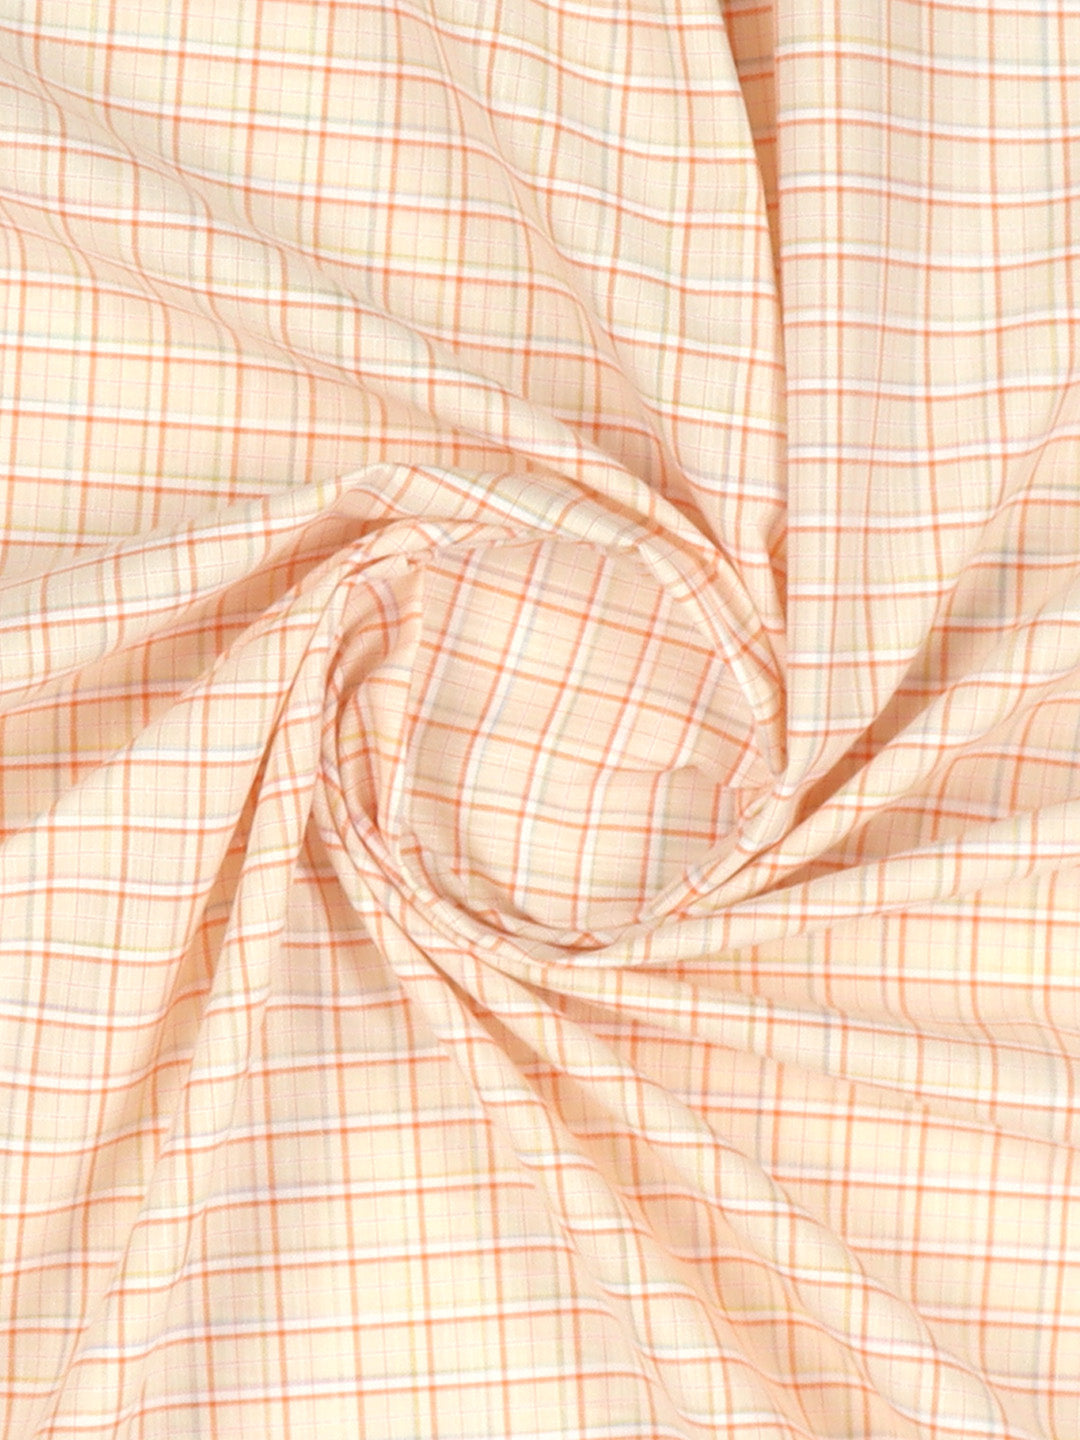 Cotton Blend Light Sandal & Orange Colour Checked Shirt Fabric Elight Gold